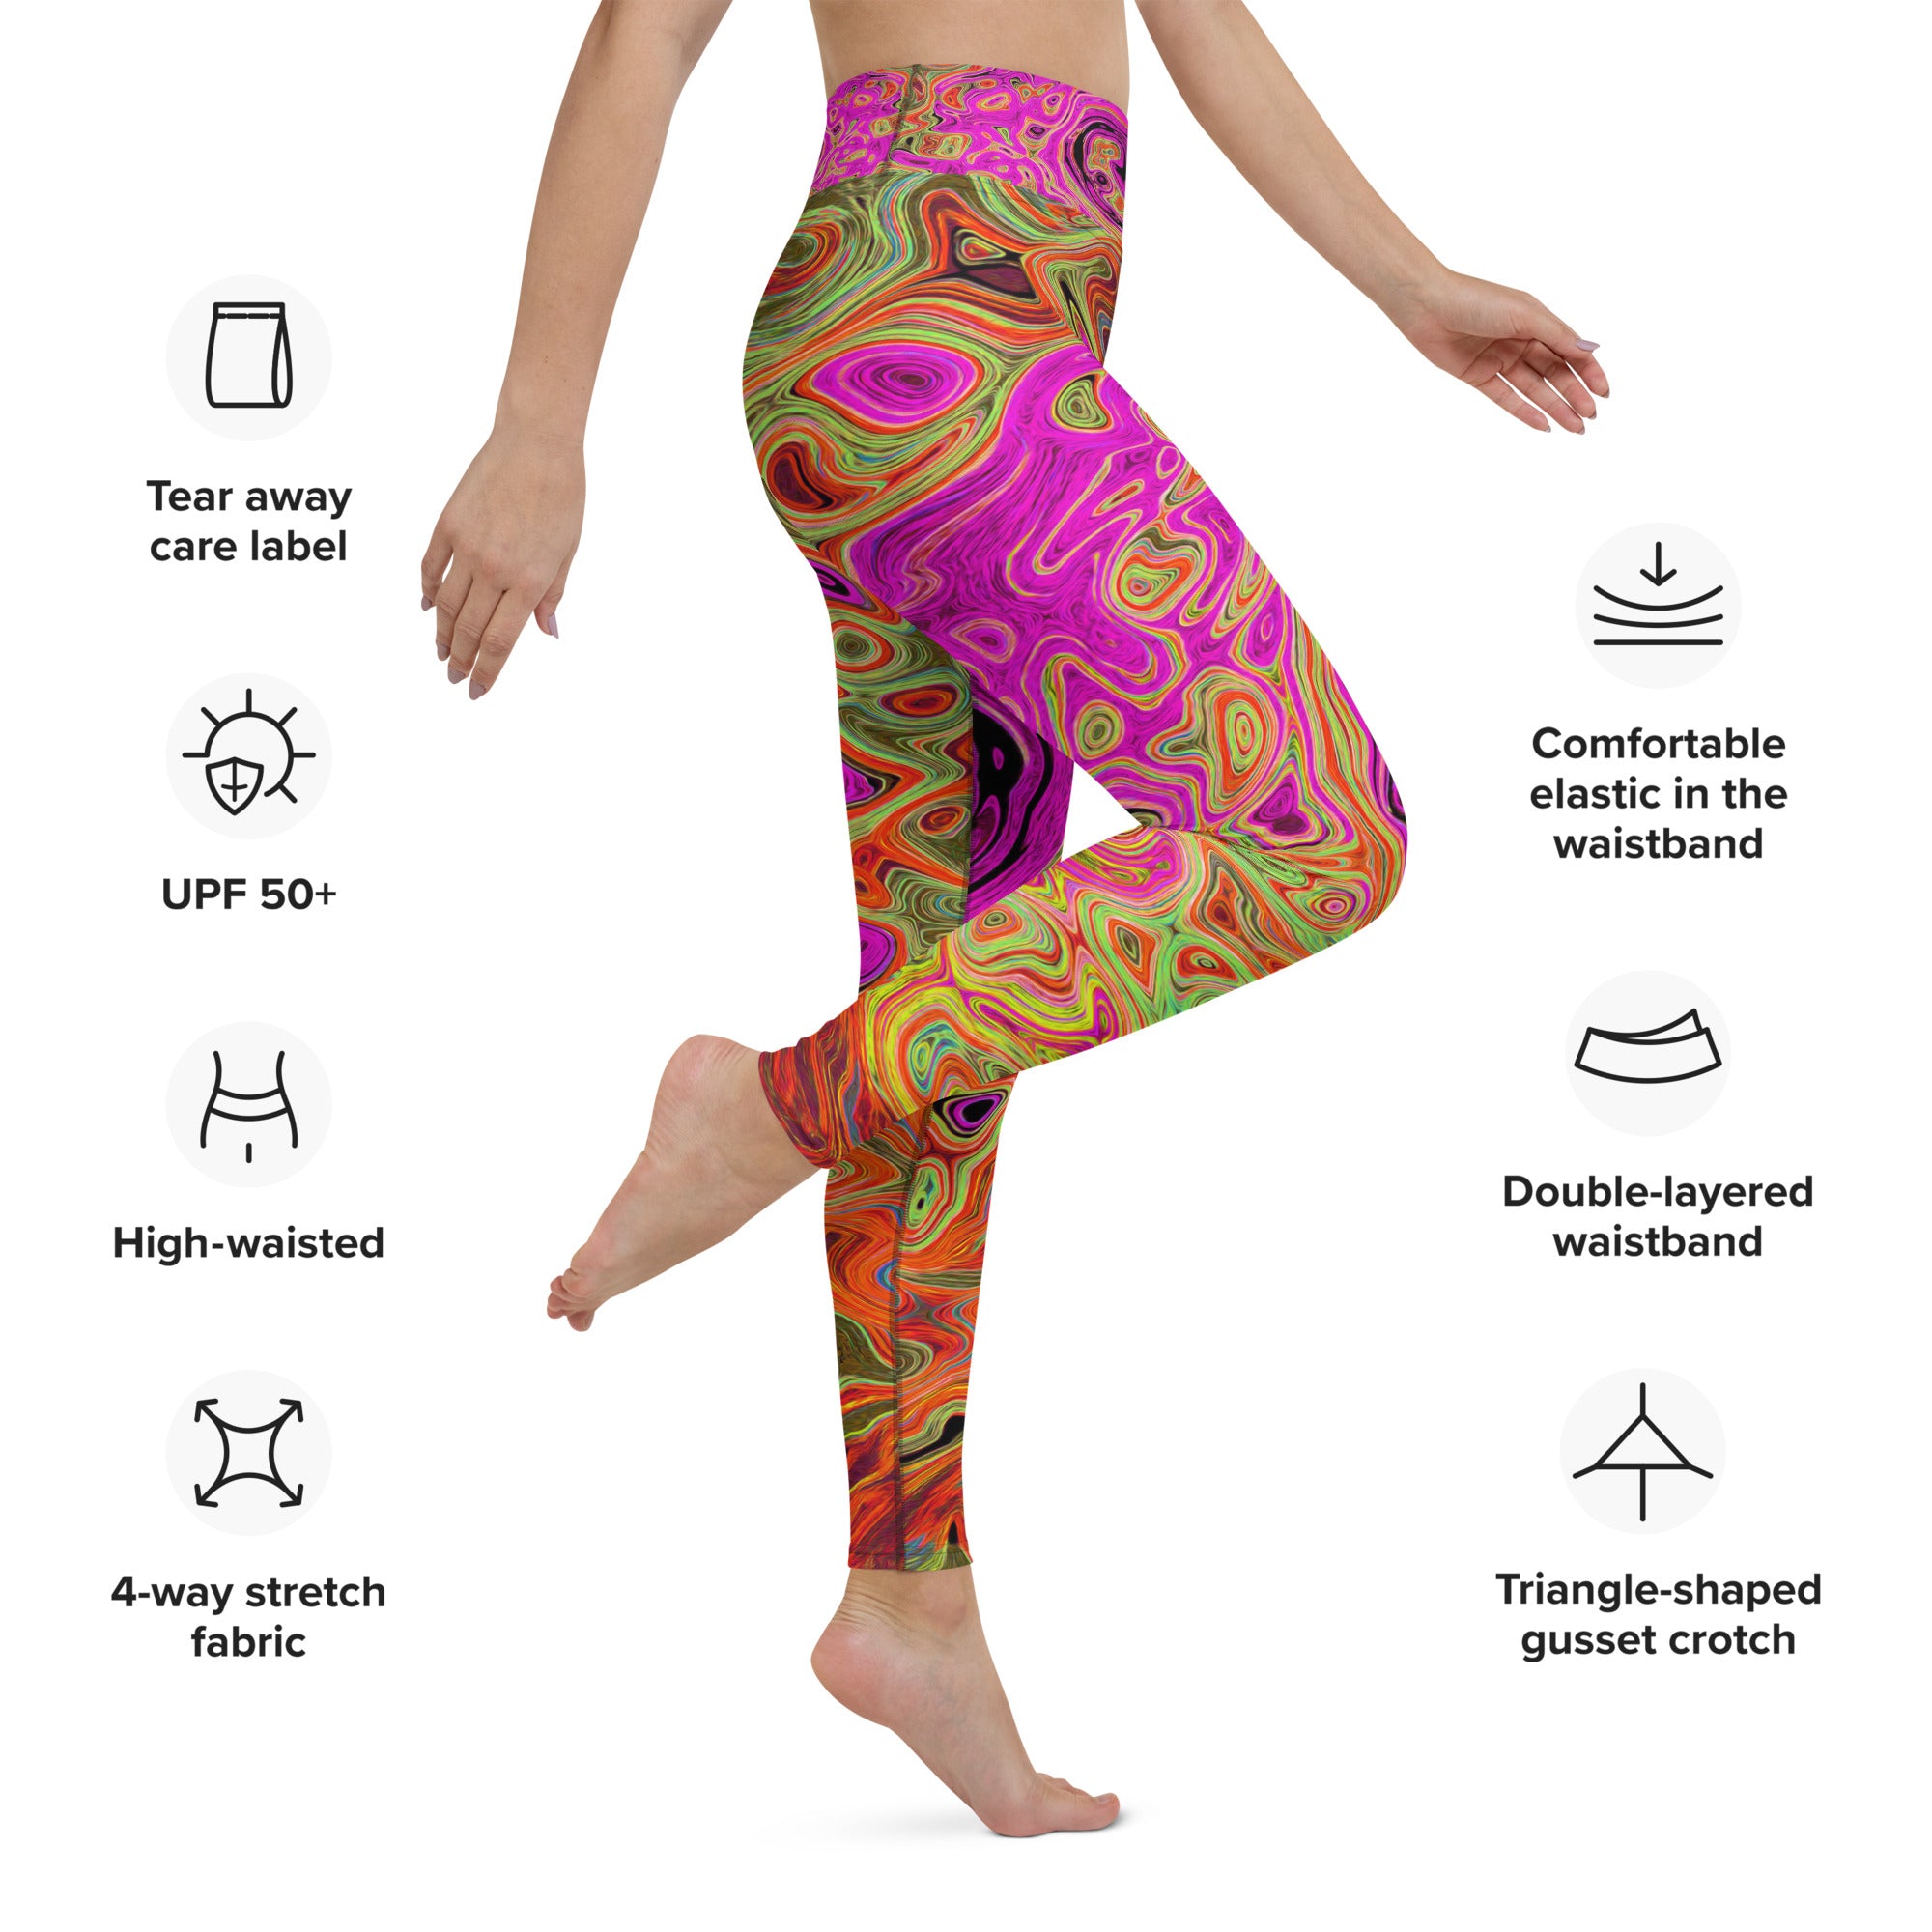 Yoga Leggings, Hot Pink Groovy Abstract Retro Liquid Swirl